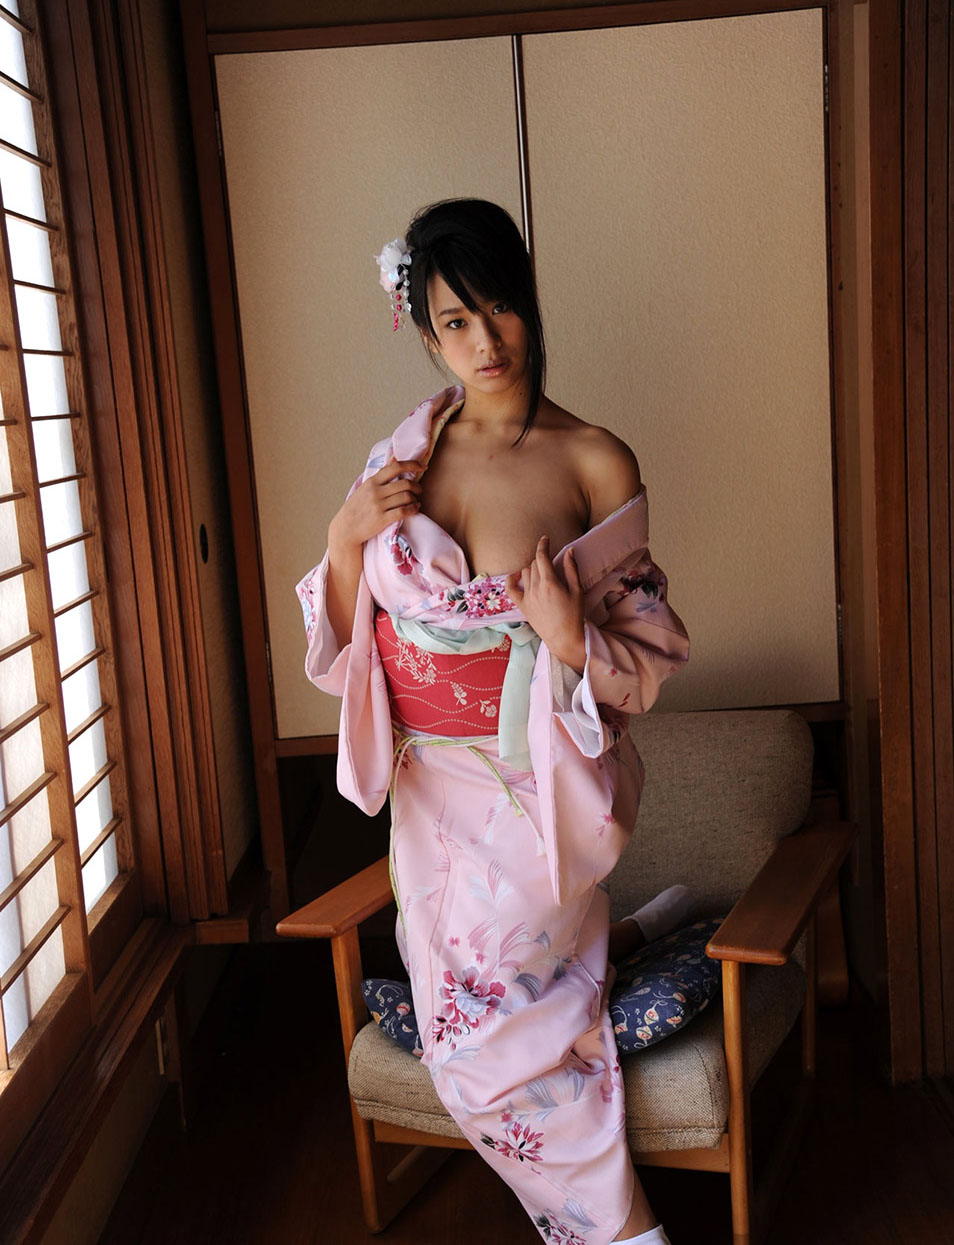 hana-haruna-tits-nude-asians-japanese-kimono-01